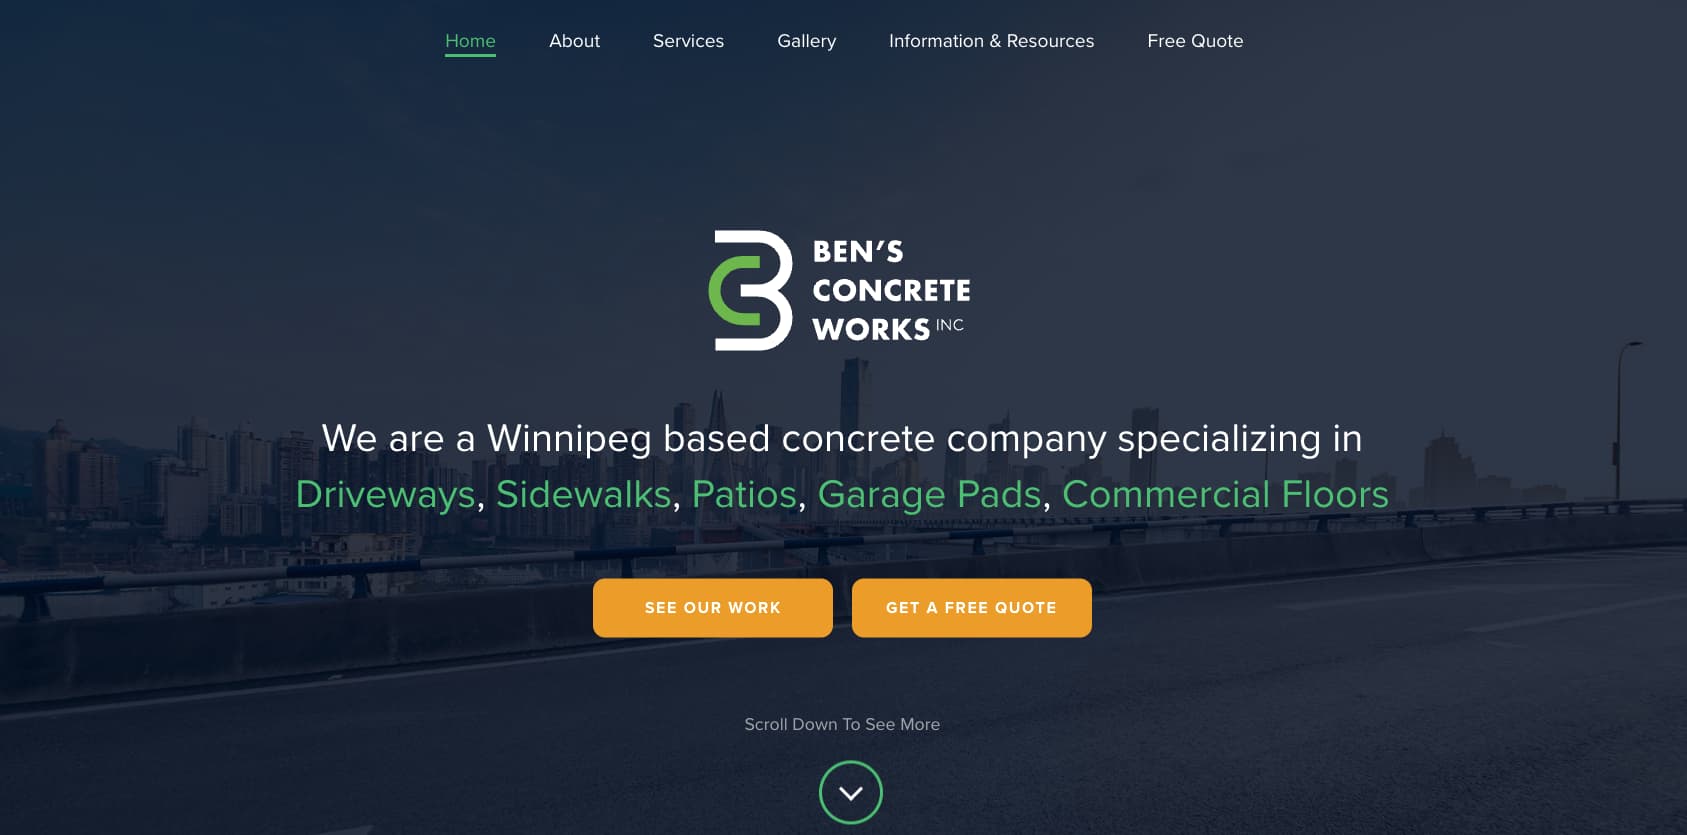 Ben's Concrete Works Inc